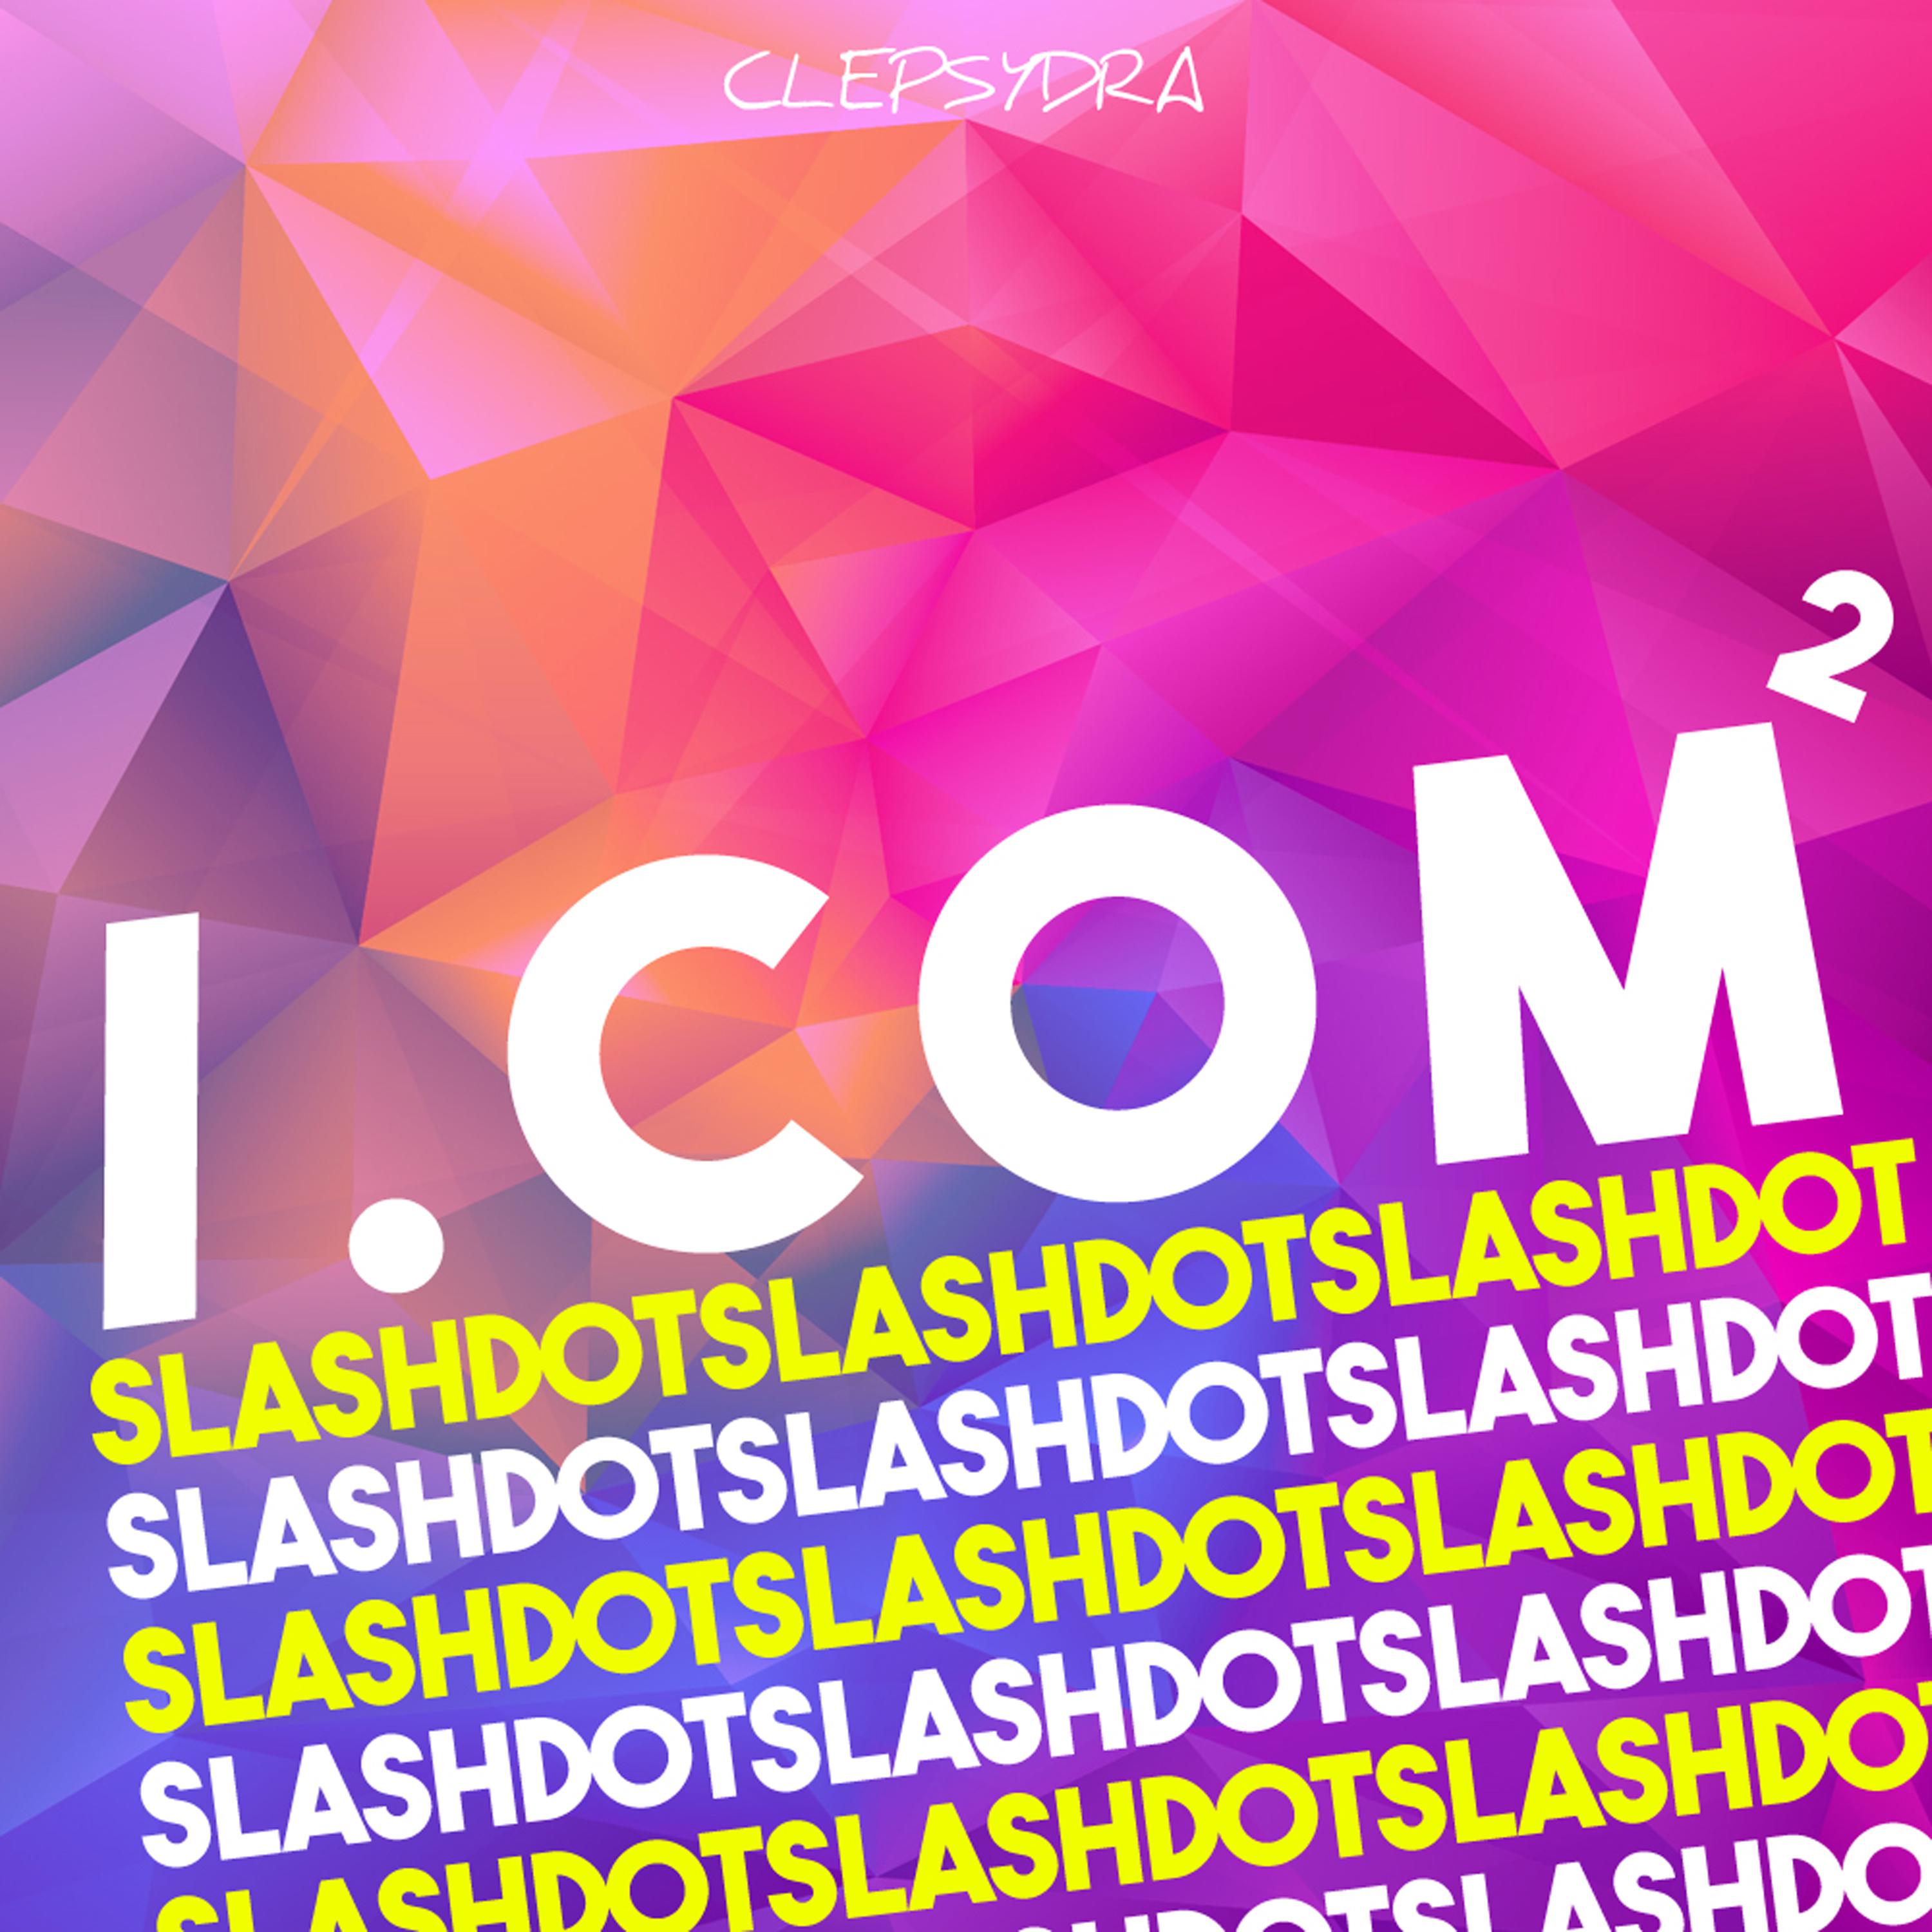 SlashDotCom 2